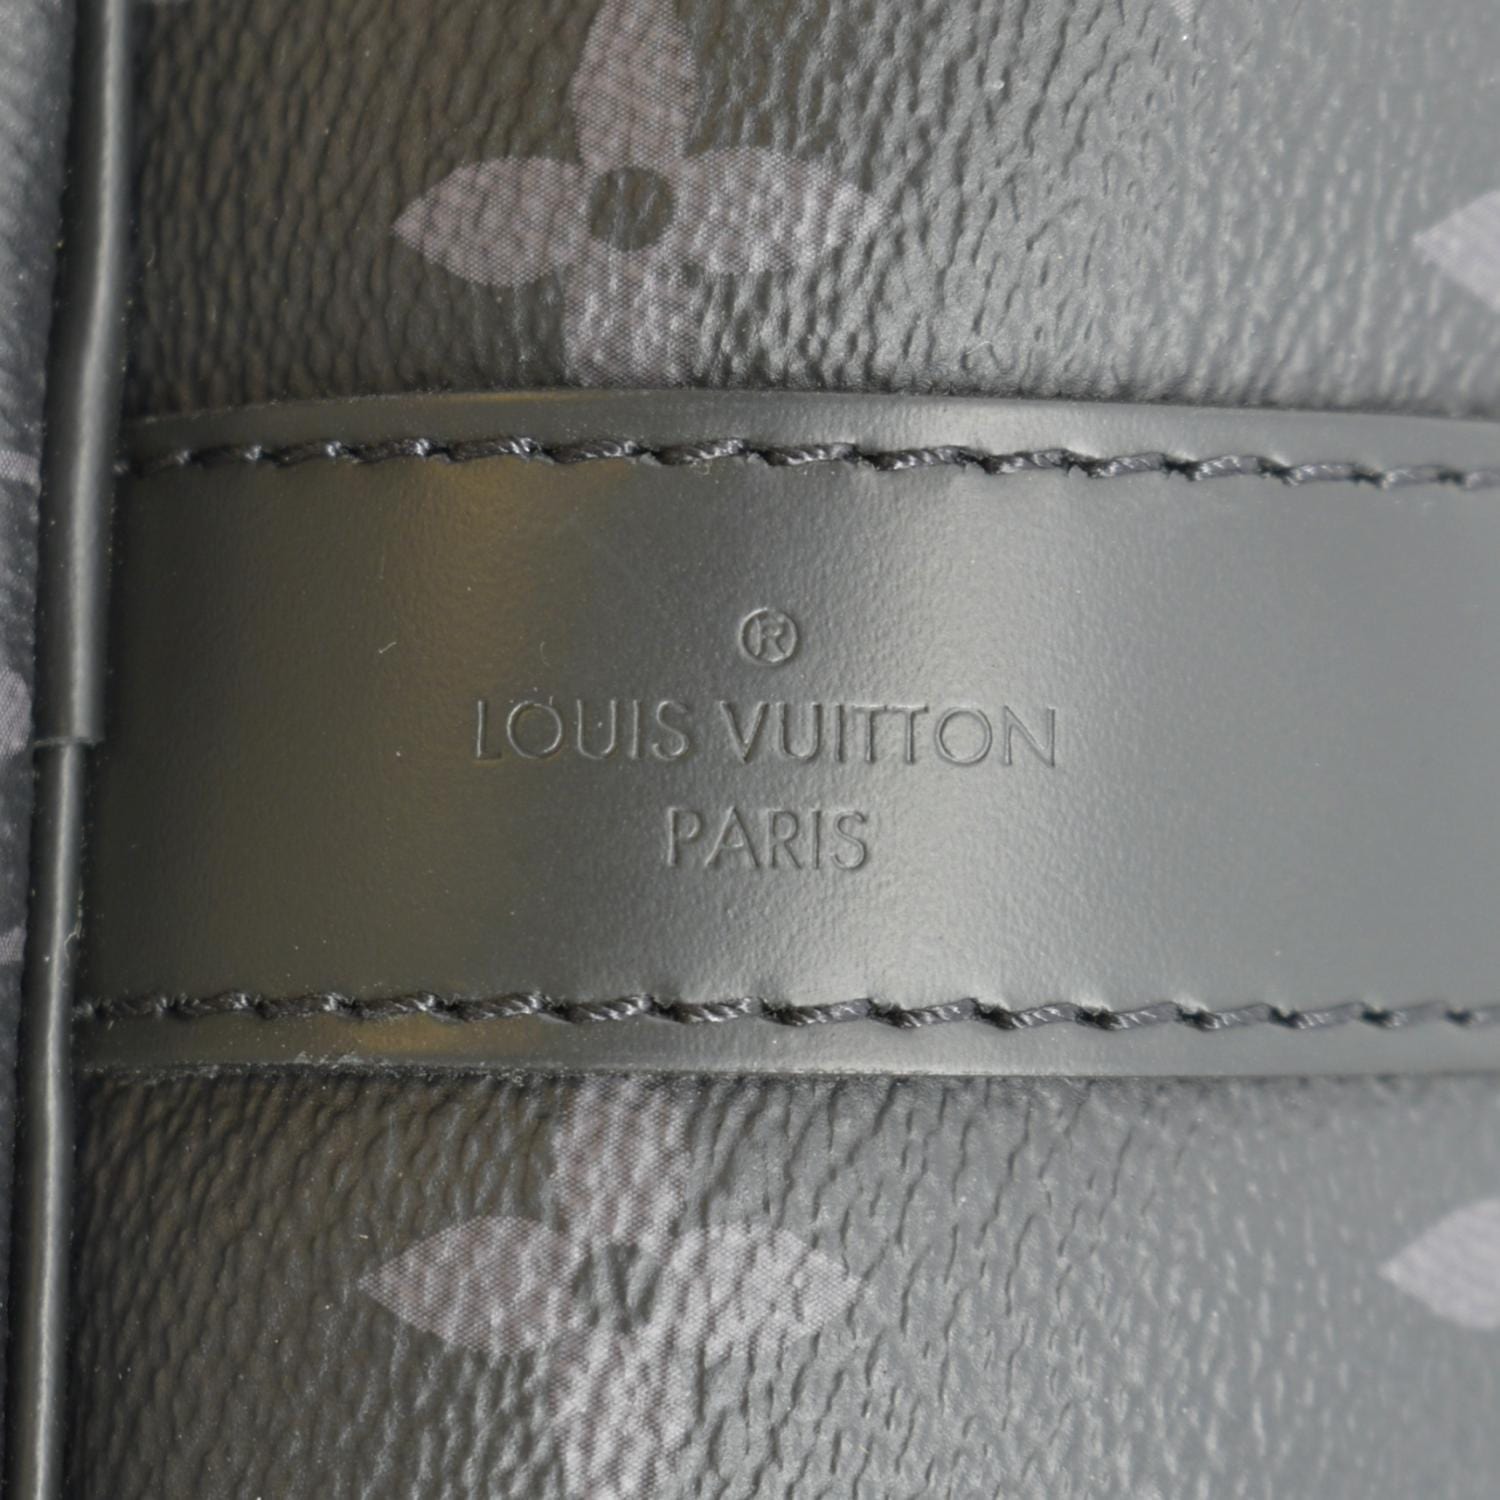 Louis Vuitton Keepall Bandoulière 55 Travel Bag